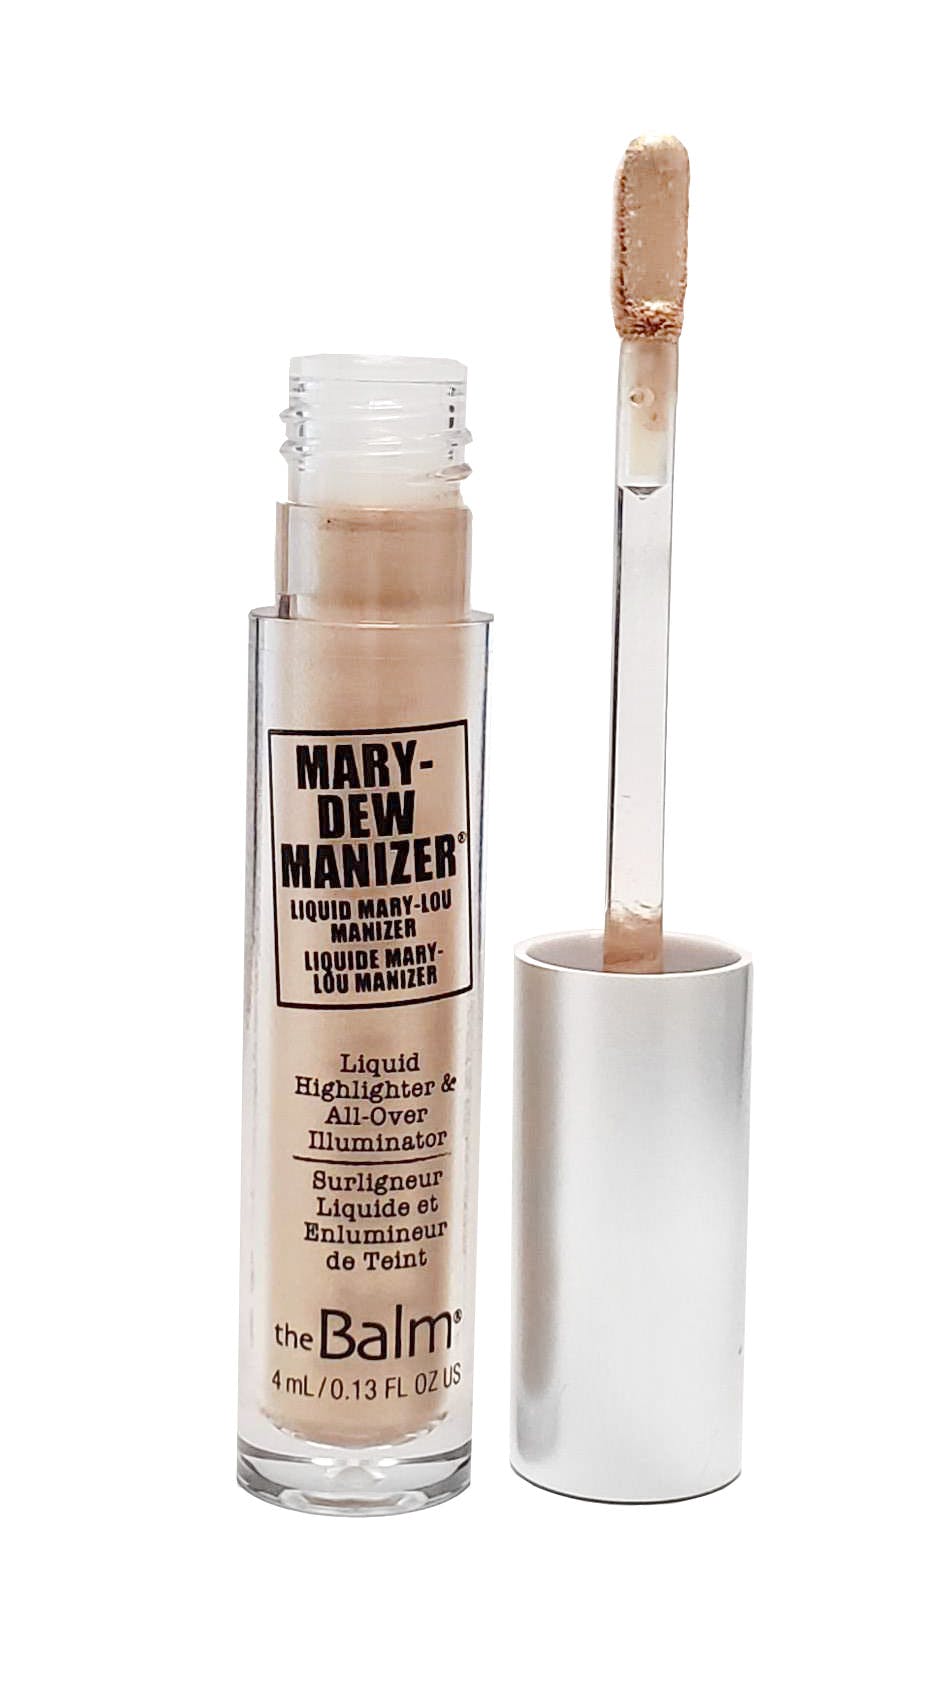 The Balm Mary-Dew Manizer Liquid Highlighter 4 ml